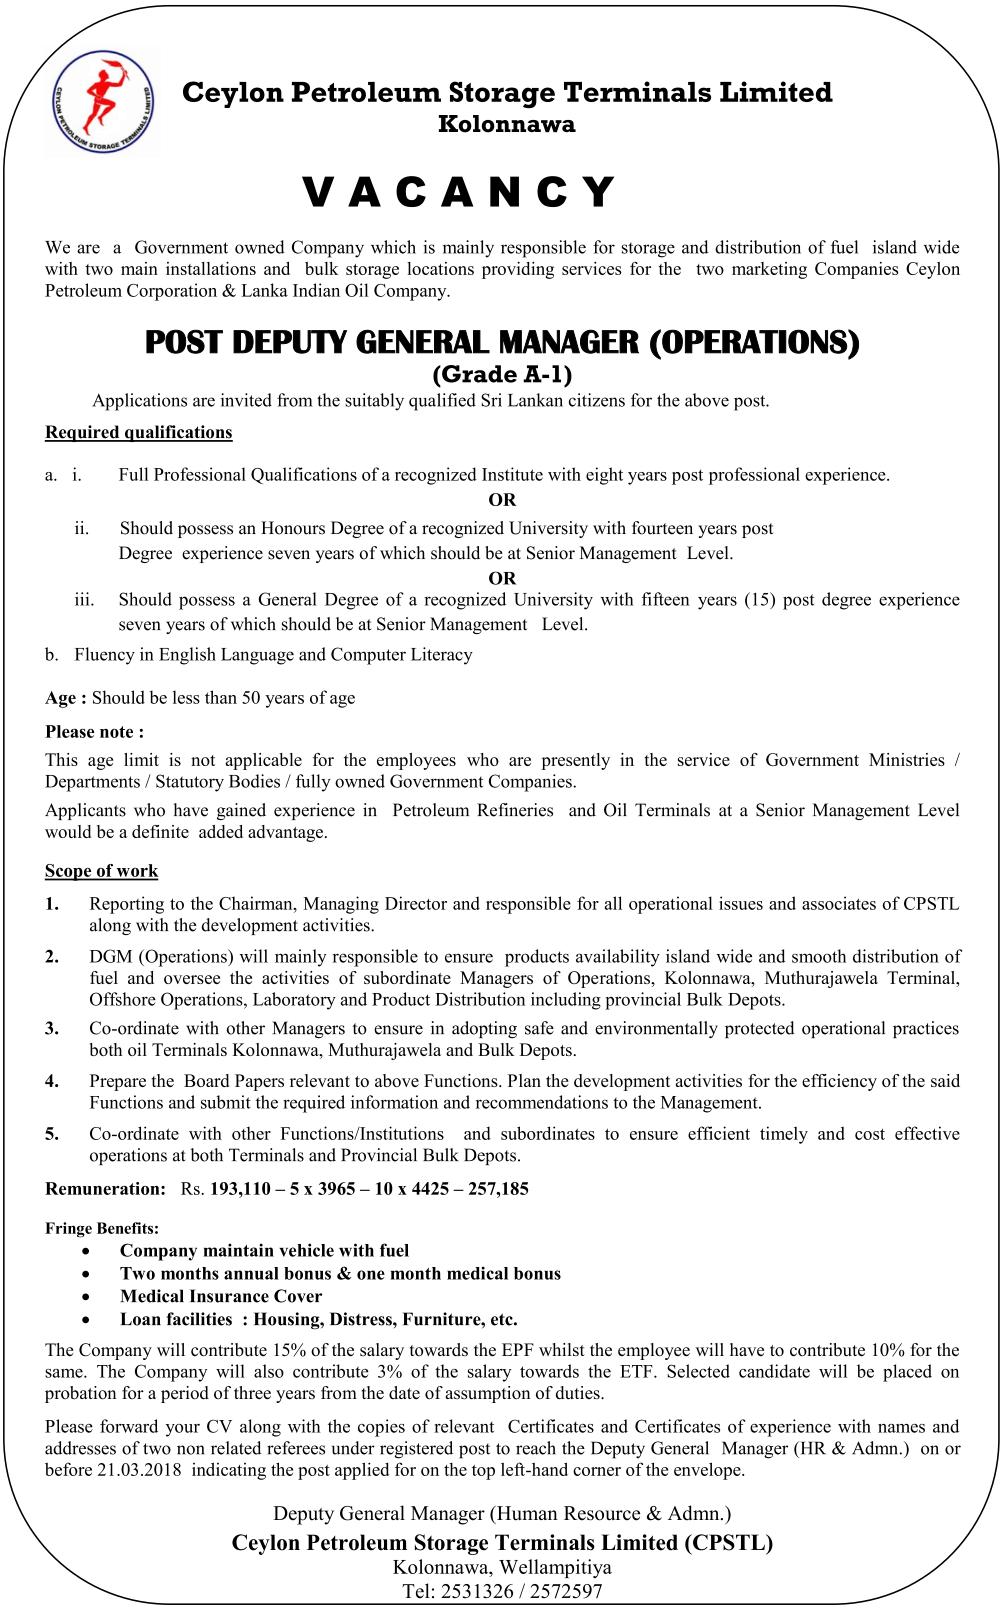 Deputy General Manager (Operations) - Ceylon Petroleum Storage Terminals